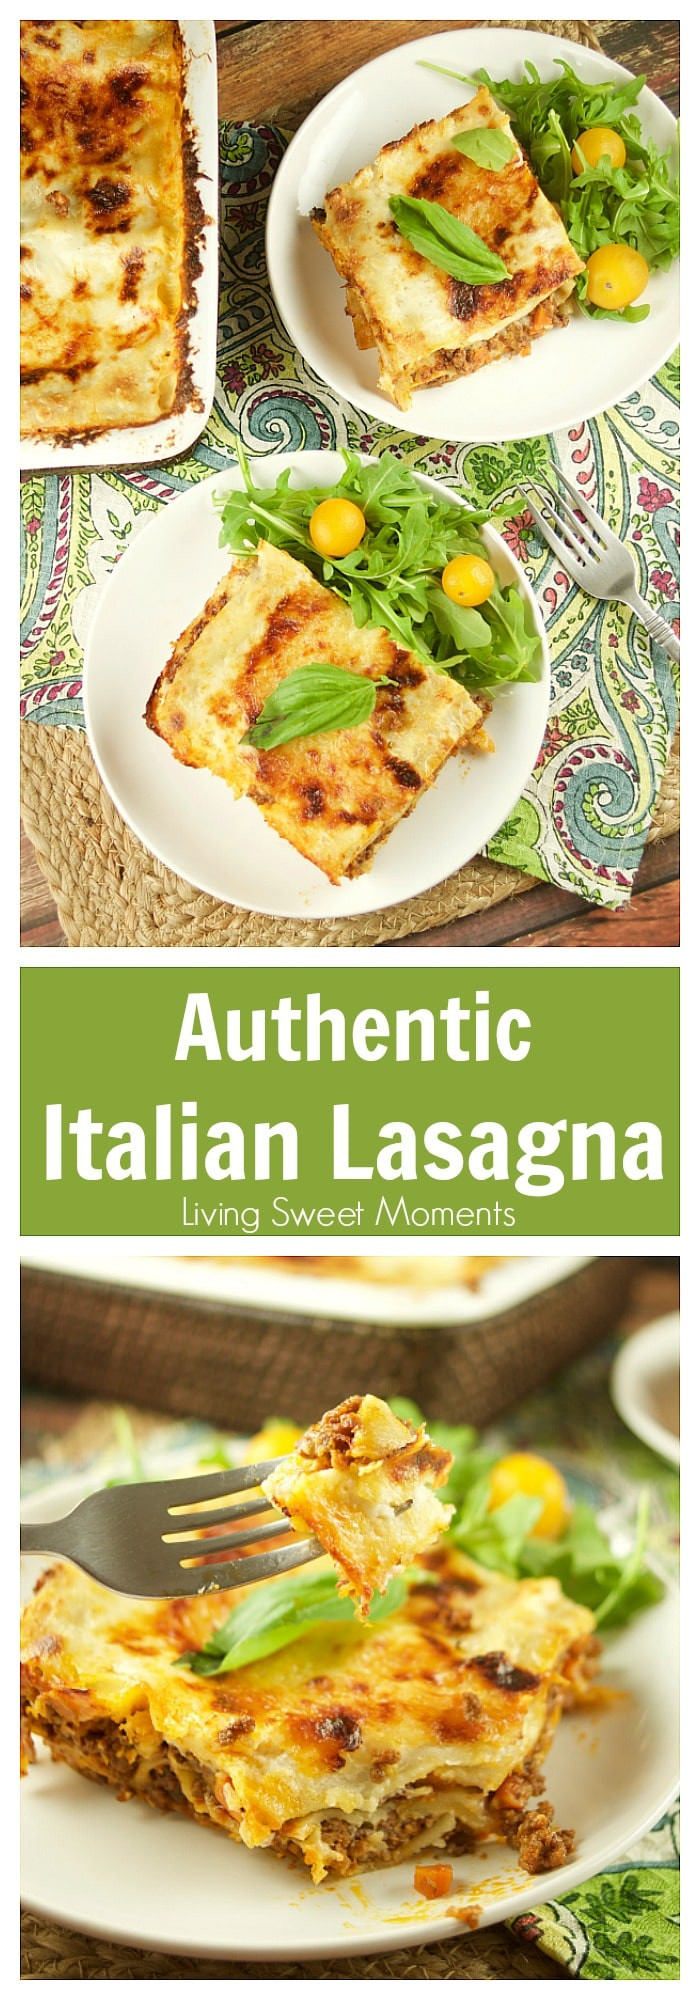 Italian Lasagna Recipe
 Authentic Italian Lasagna Recipe Living Sweet Moments